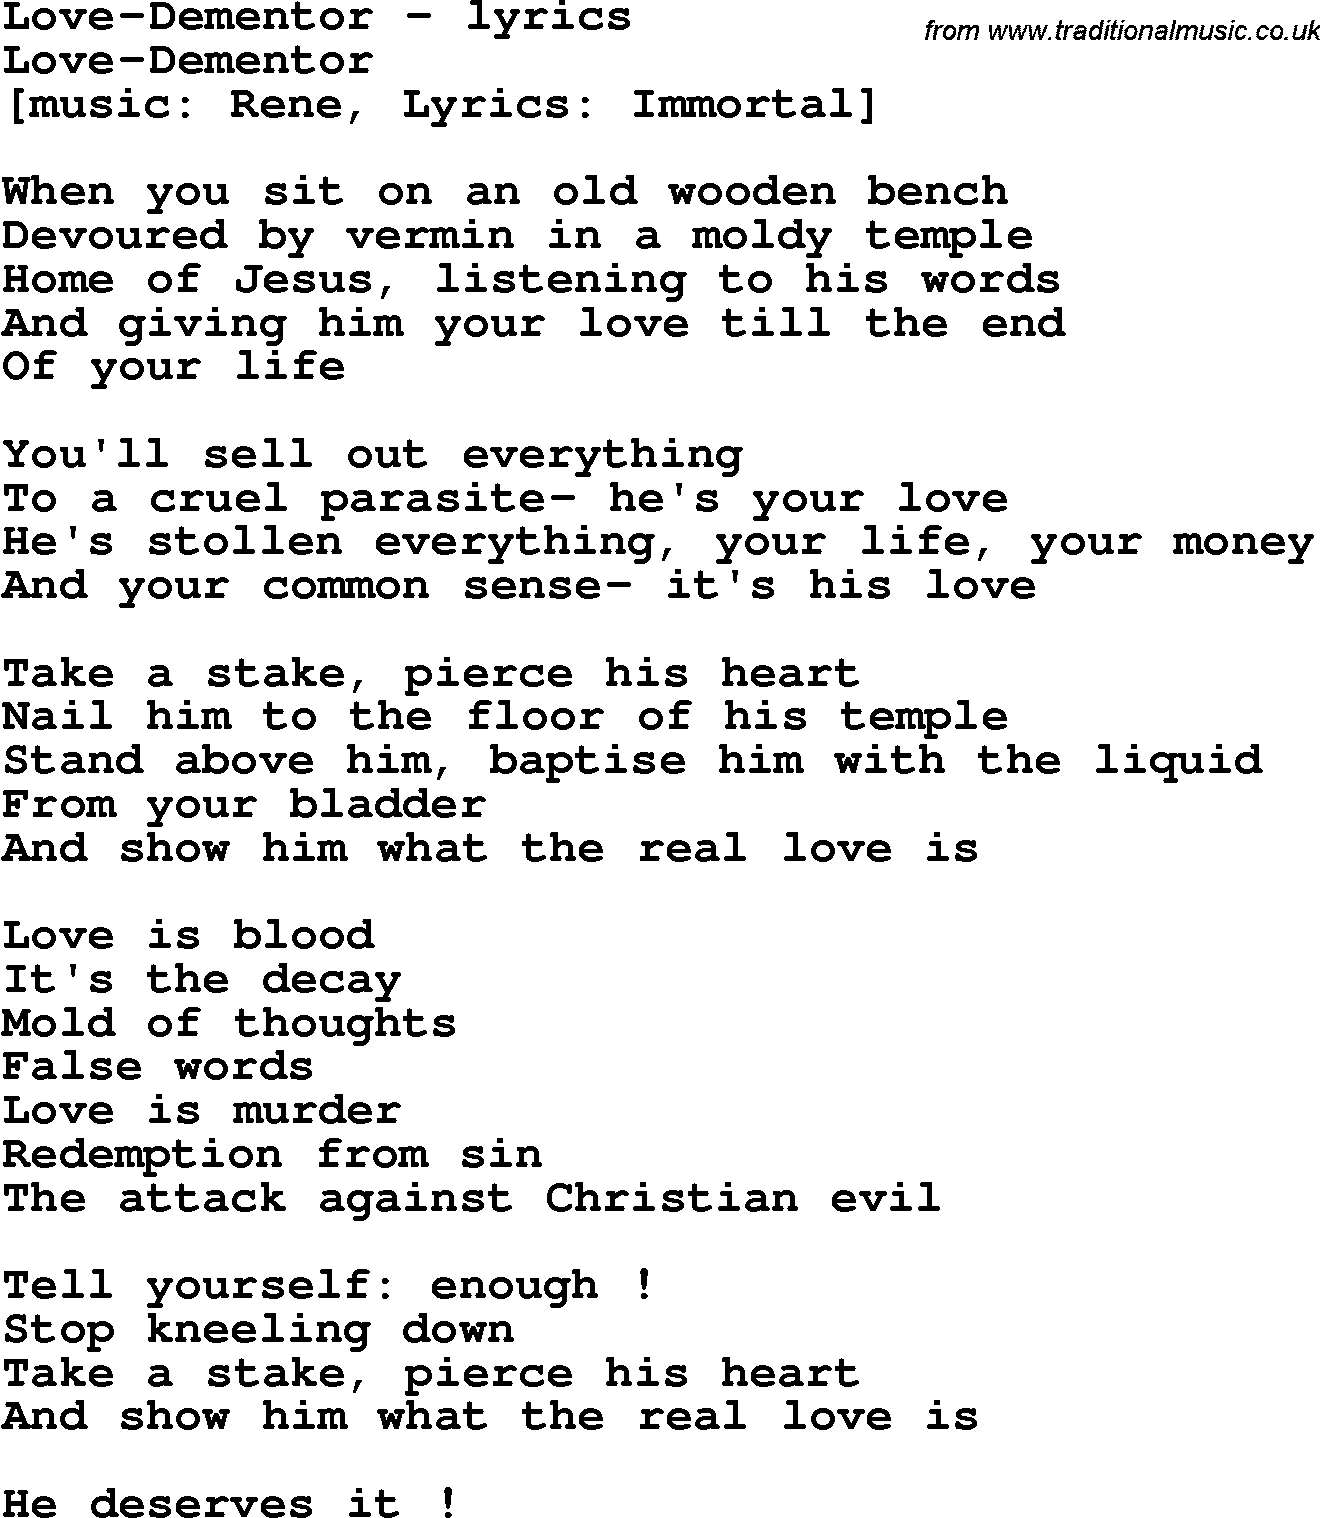 Love Song Lyrics for: Love-Dementor